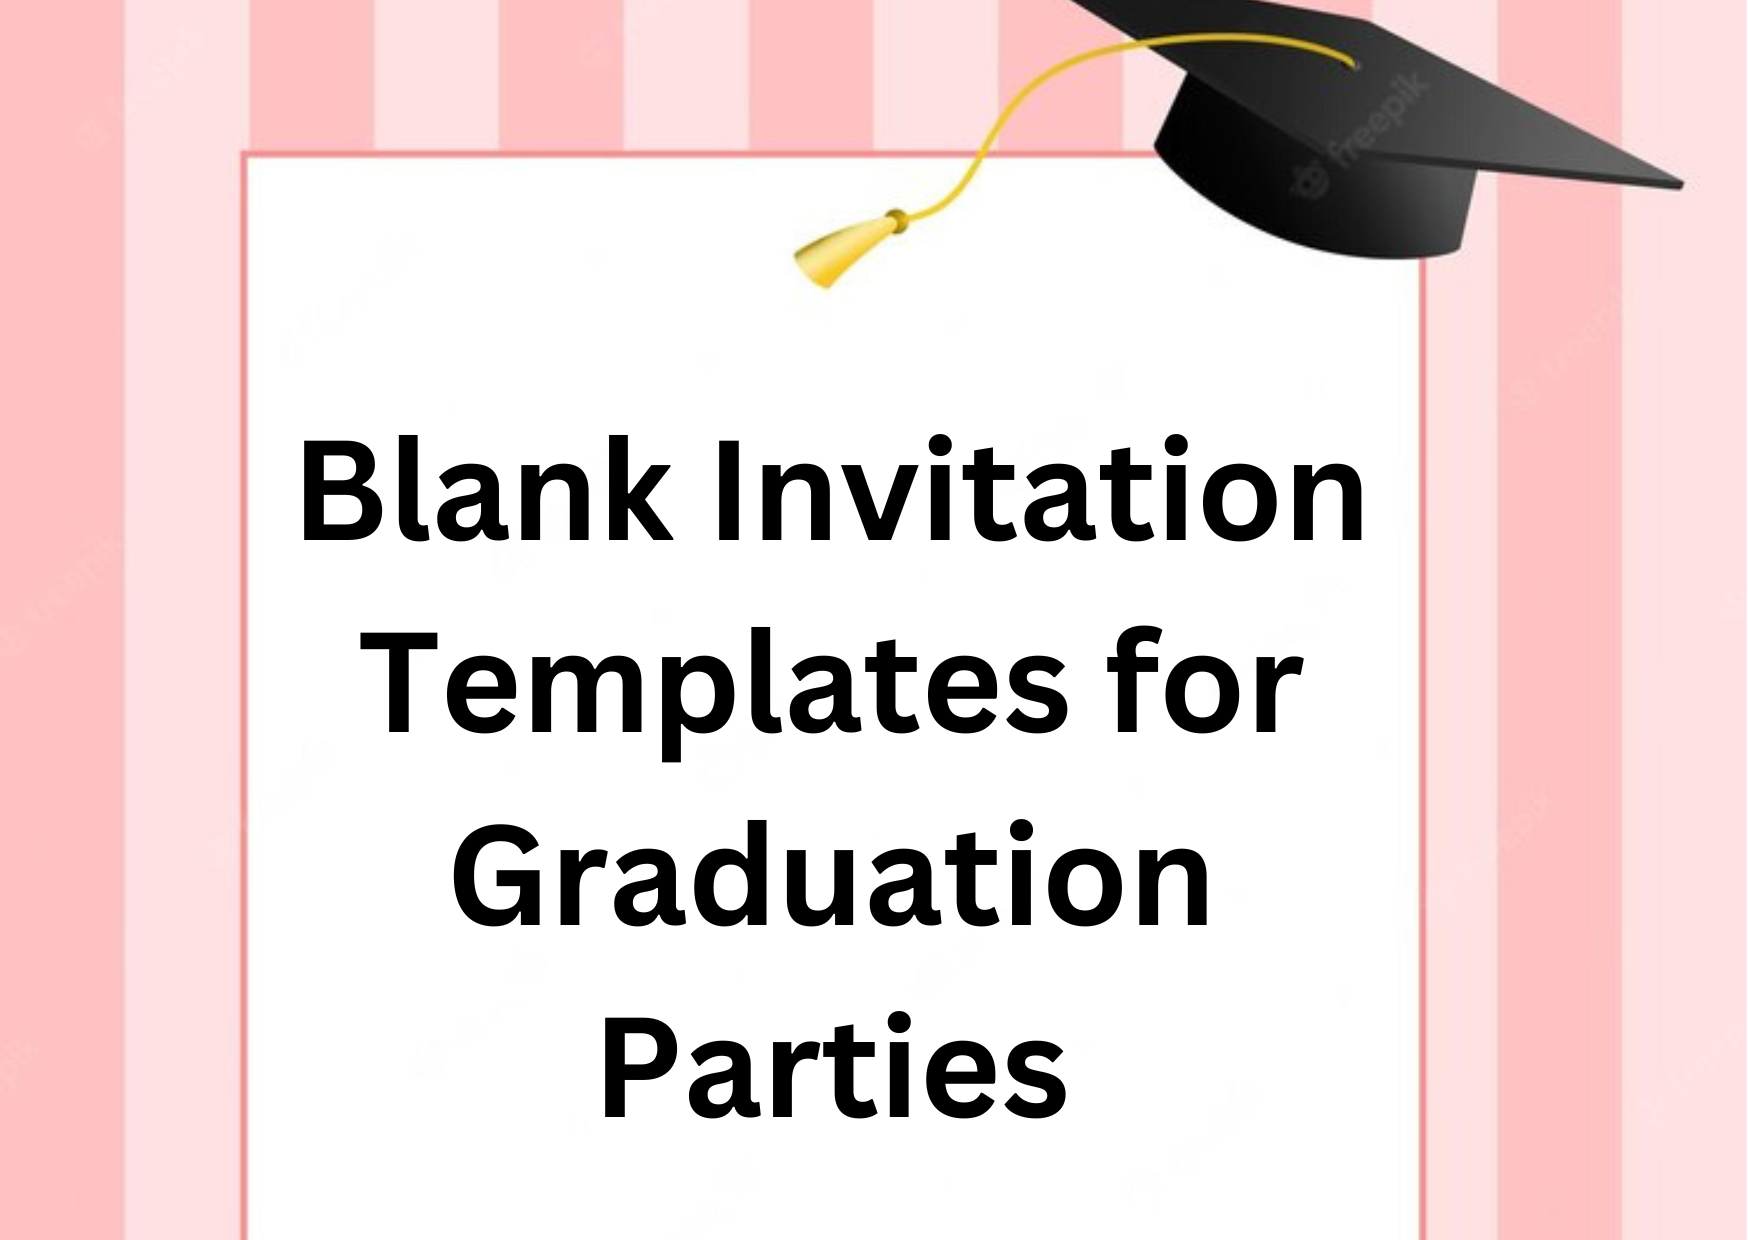 Blank Invitation Templates for Graduation Parties